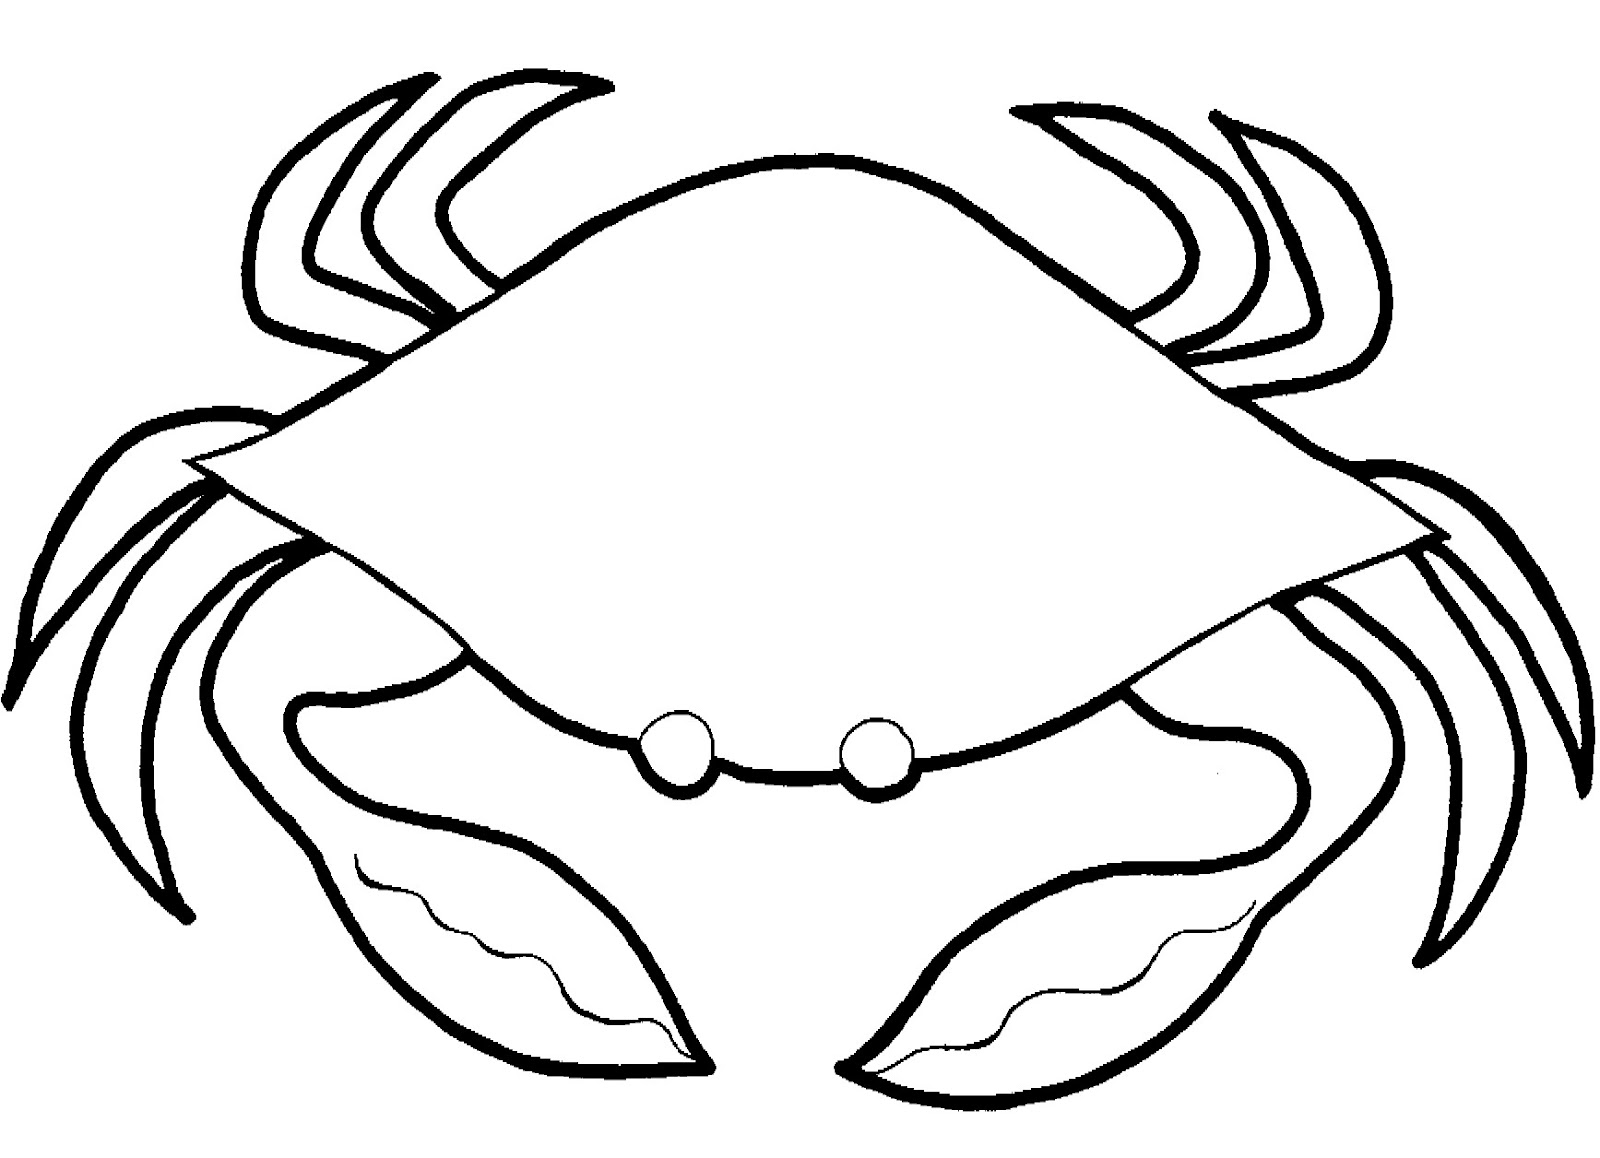 17 Marine Animals " Crab " Coloring Sheet